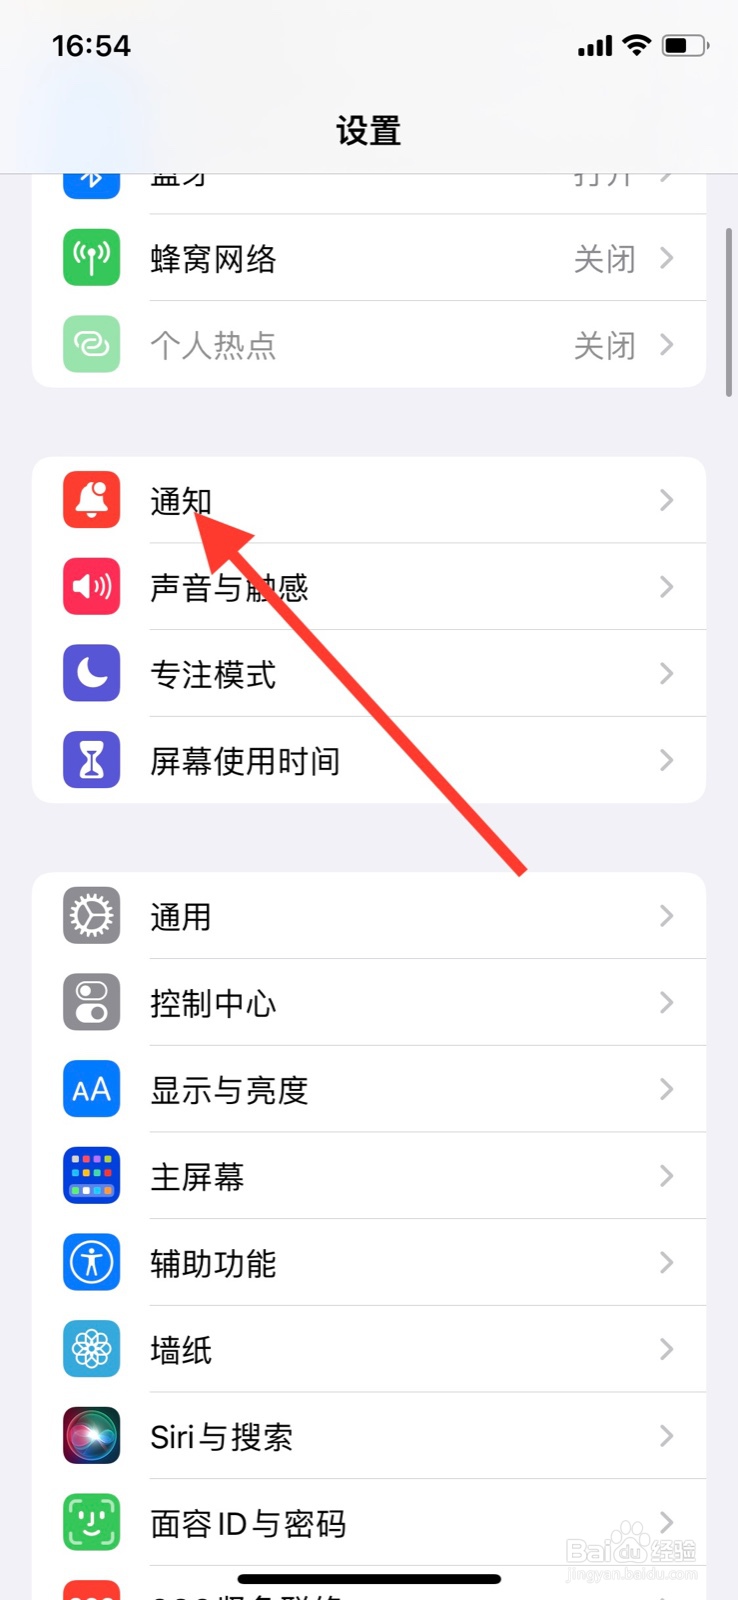 <b>iPhone锁定屏幕允许“欢乐斗地主”app通知显示</b>